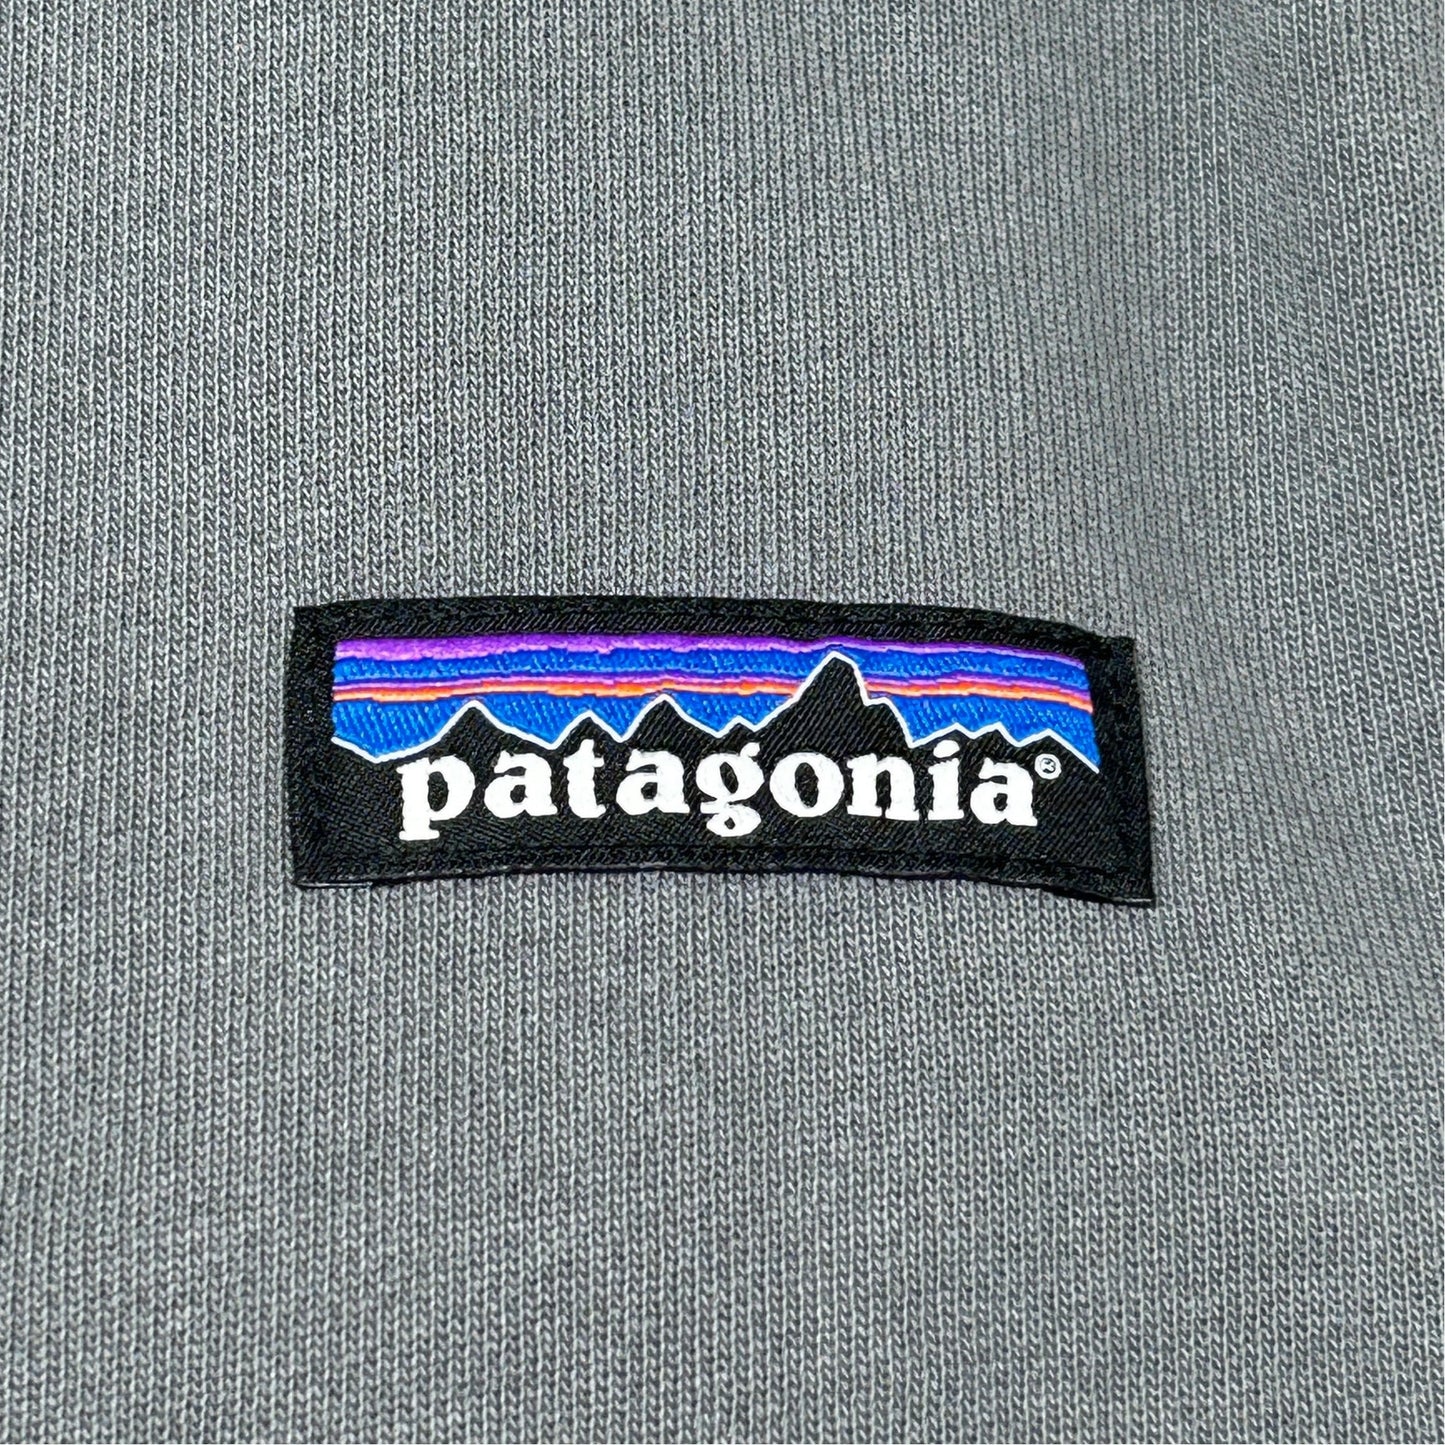 PATAGONIA Regenerative Organic Cotton Hoody Sweatshirt Sz M Noble Grey (New)